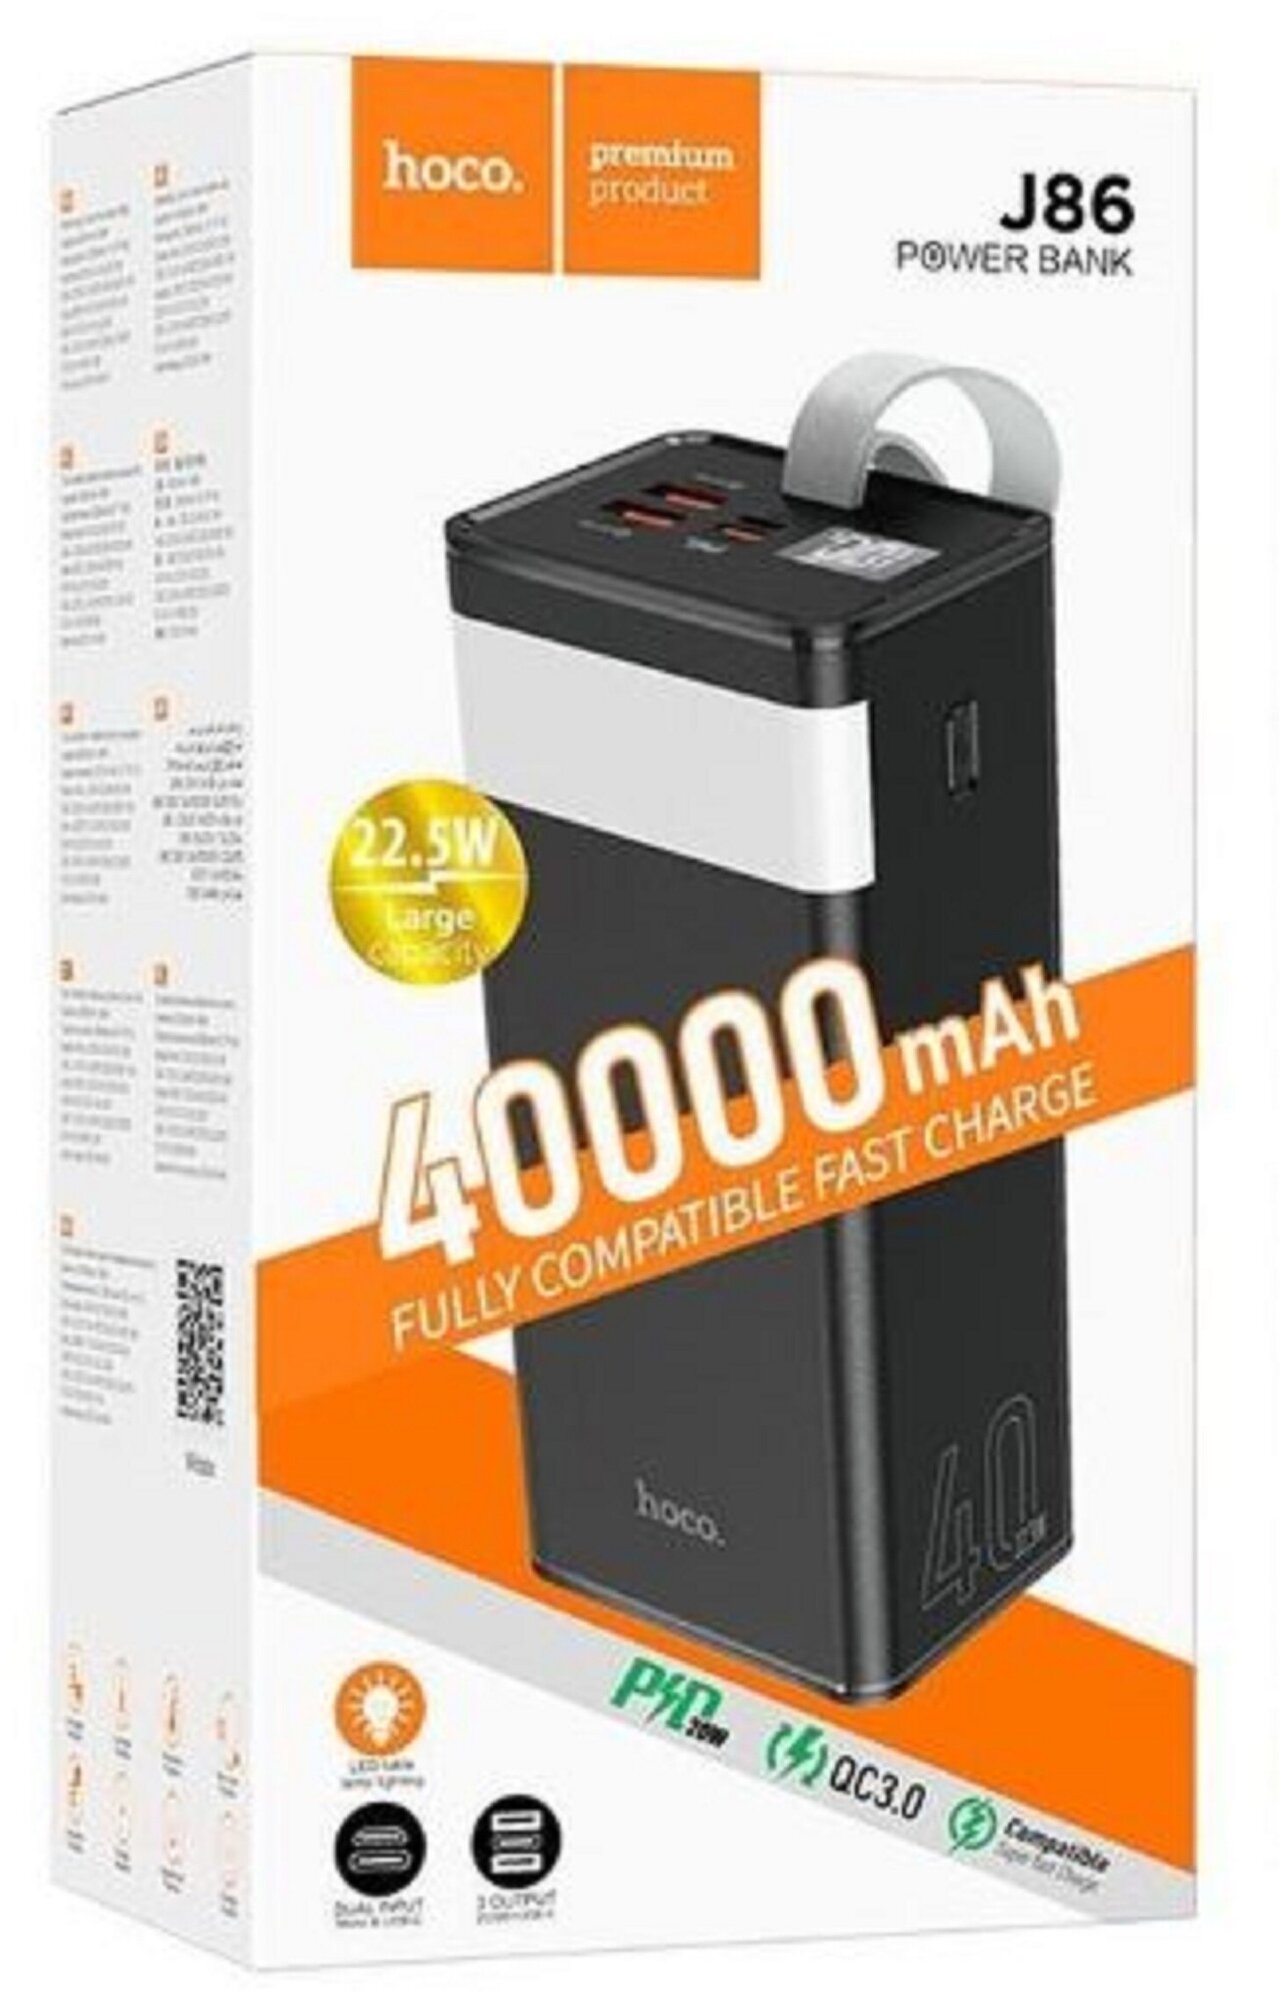 Внешний аккумулятор HOCO J86 Power Master, 22.5W, 3A, 40000 мА⋅ч, LED дисплей, Лампа, Черный